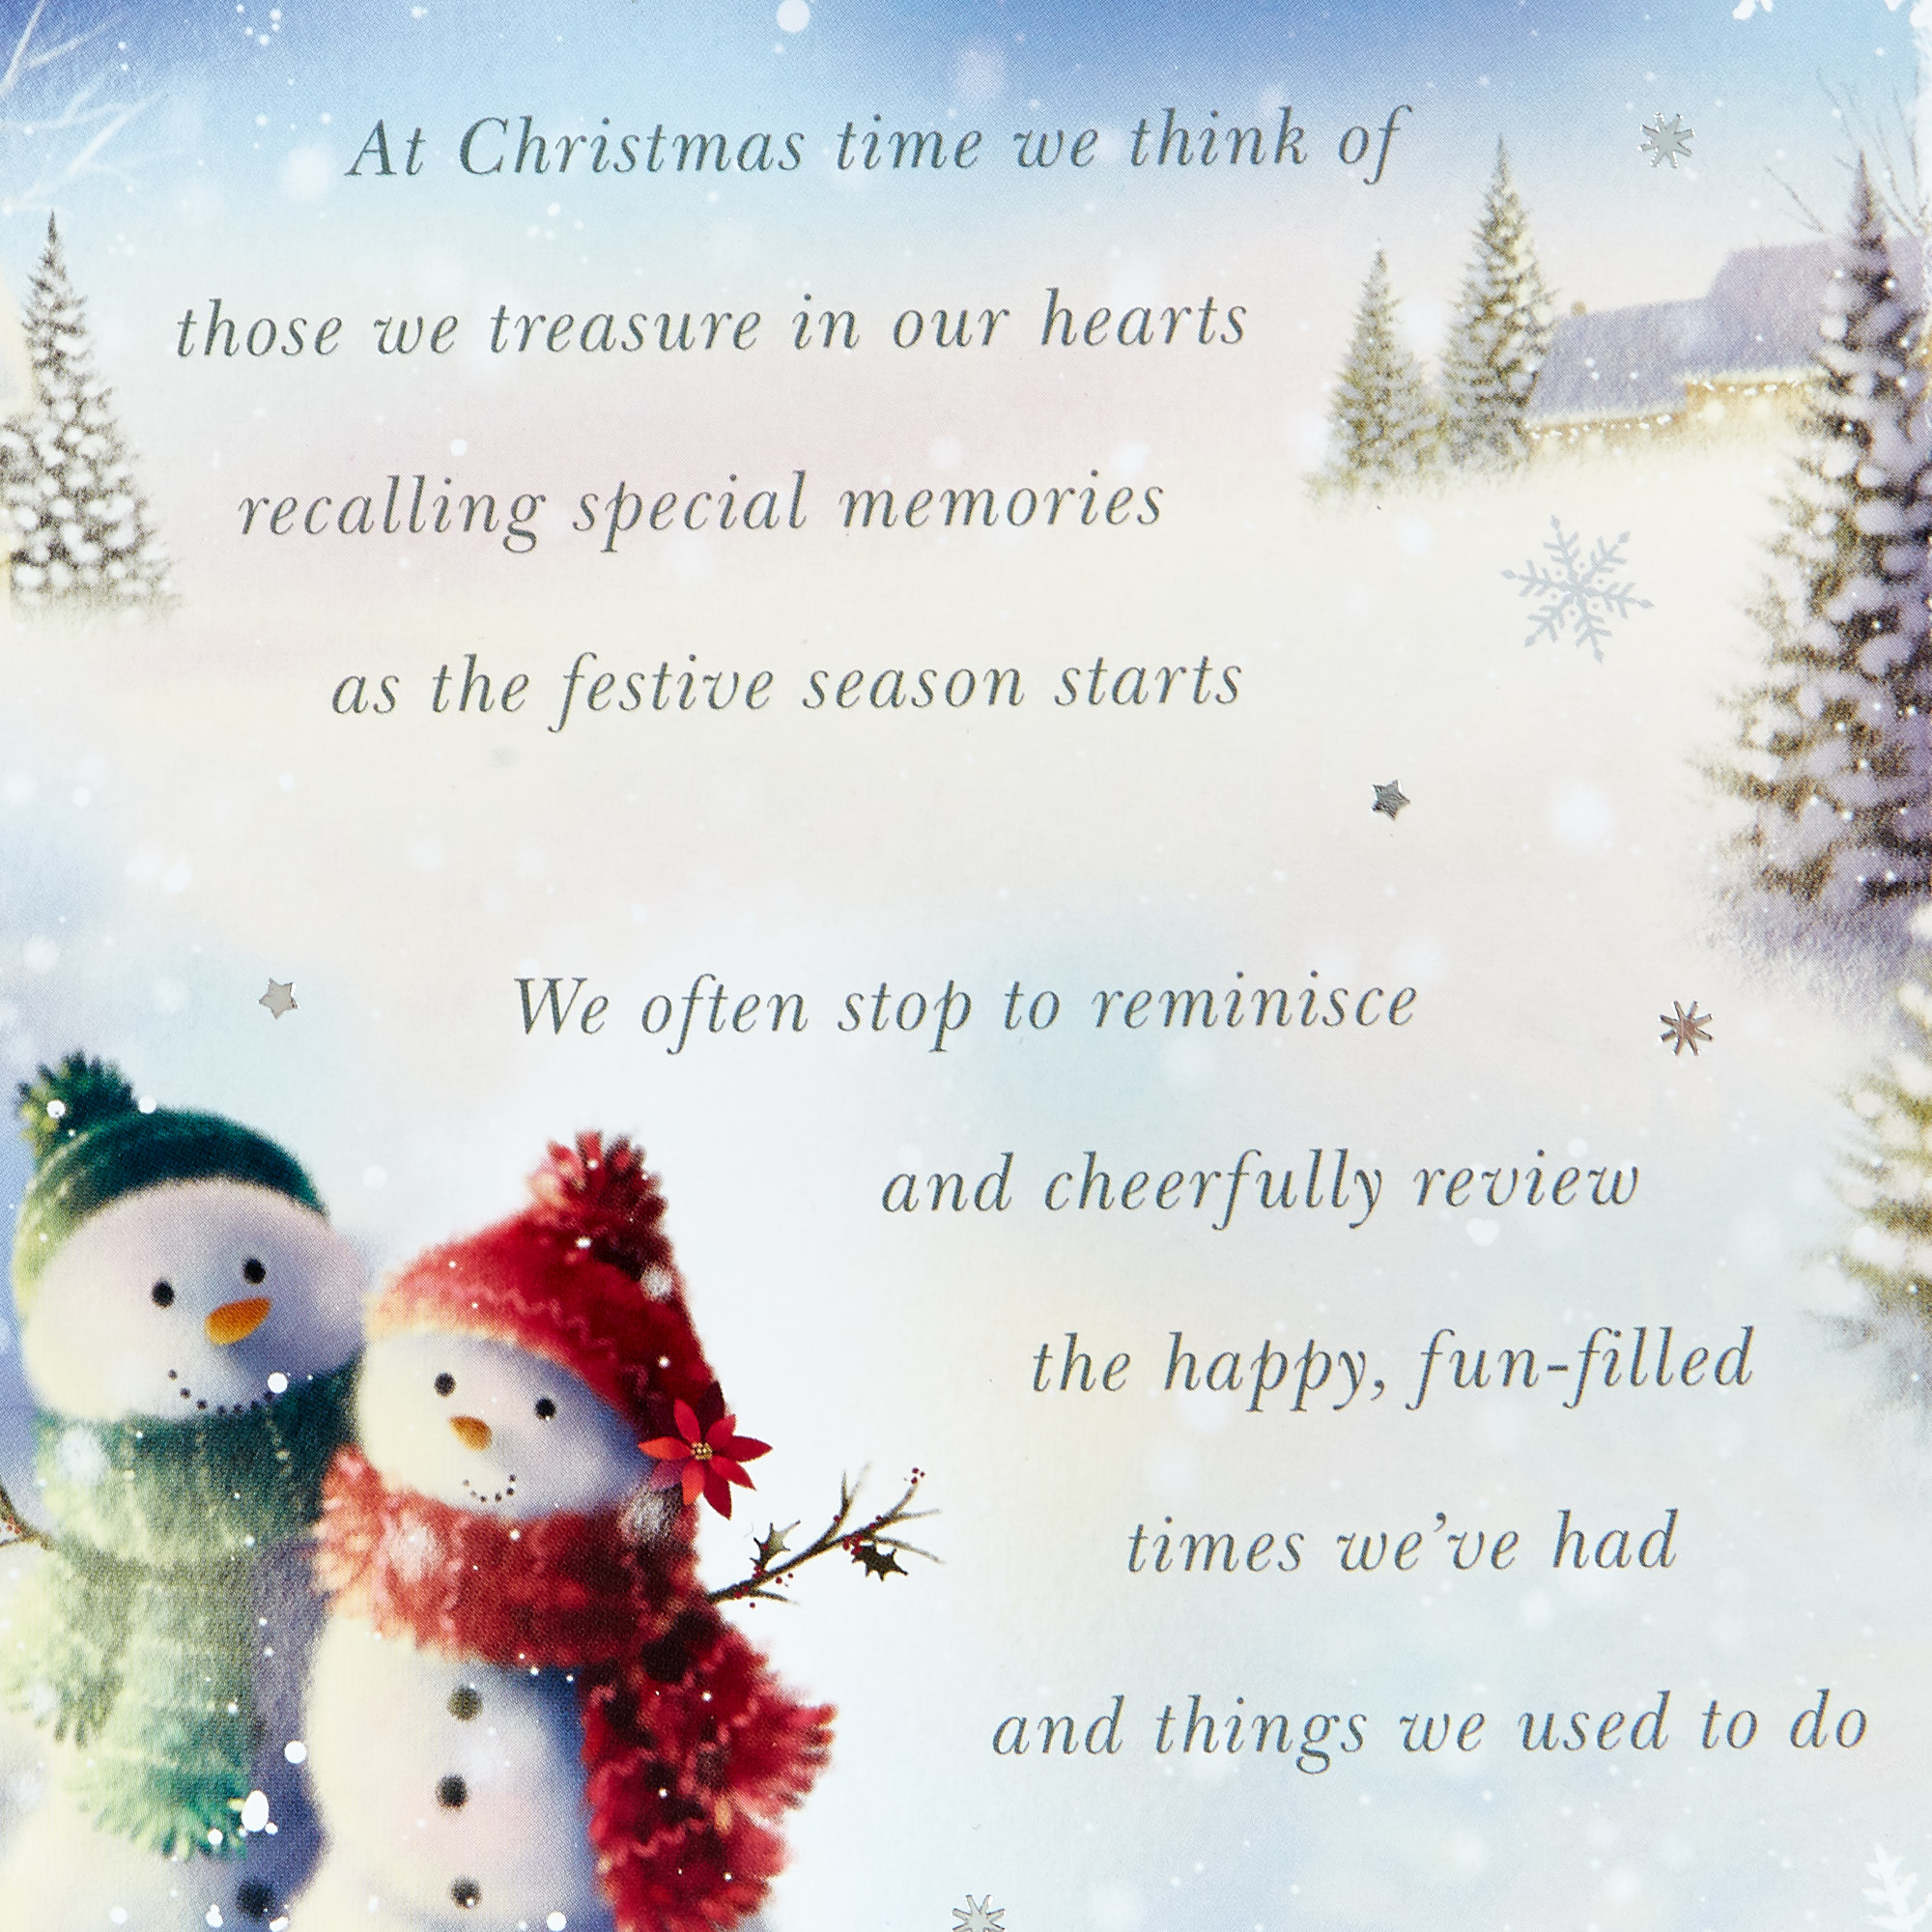 Christmas Card - Wonderful Friends Snowmen